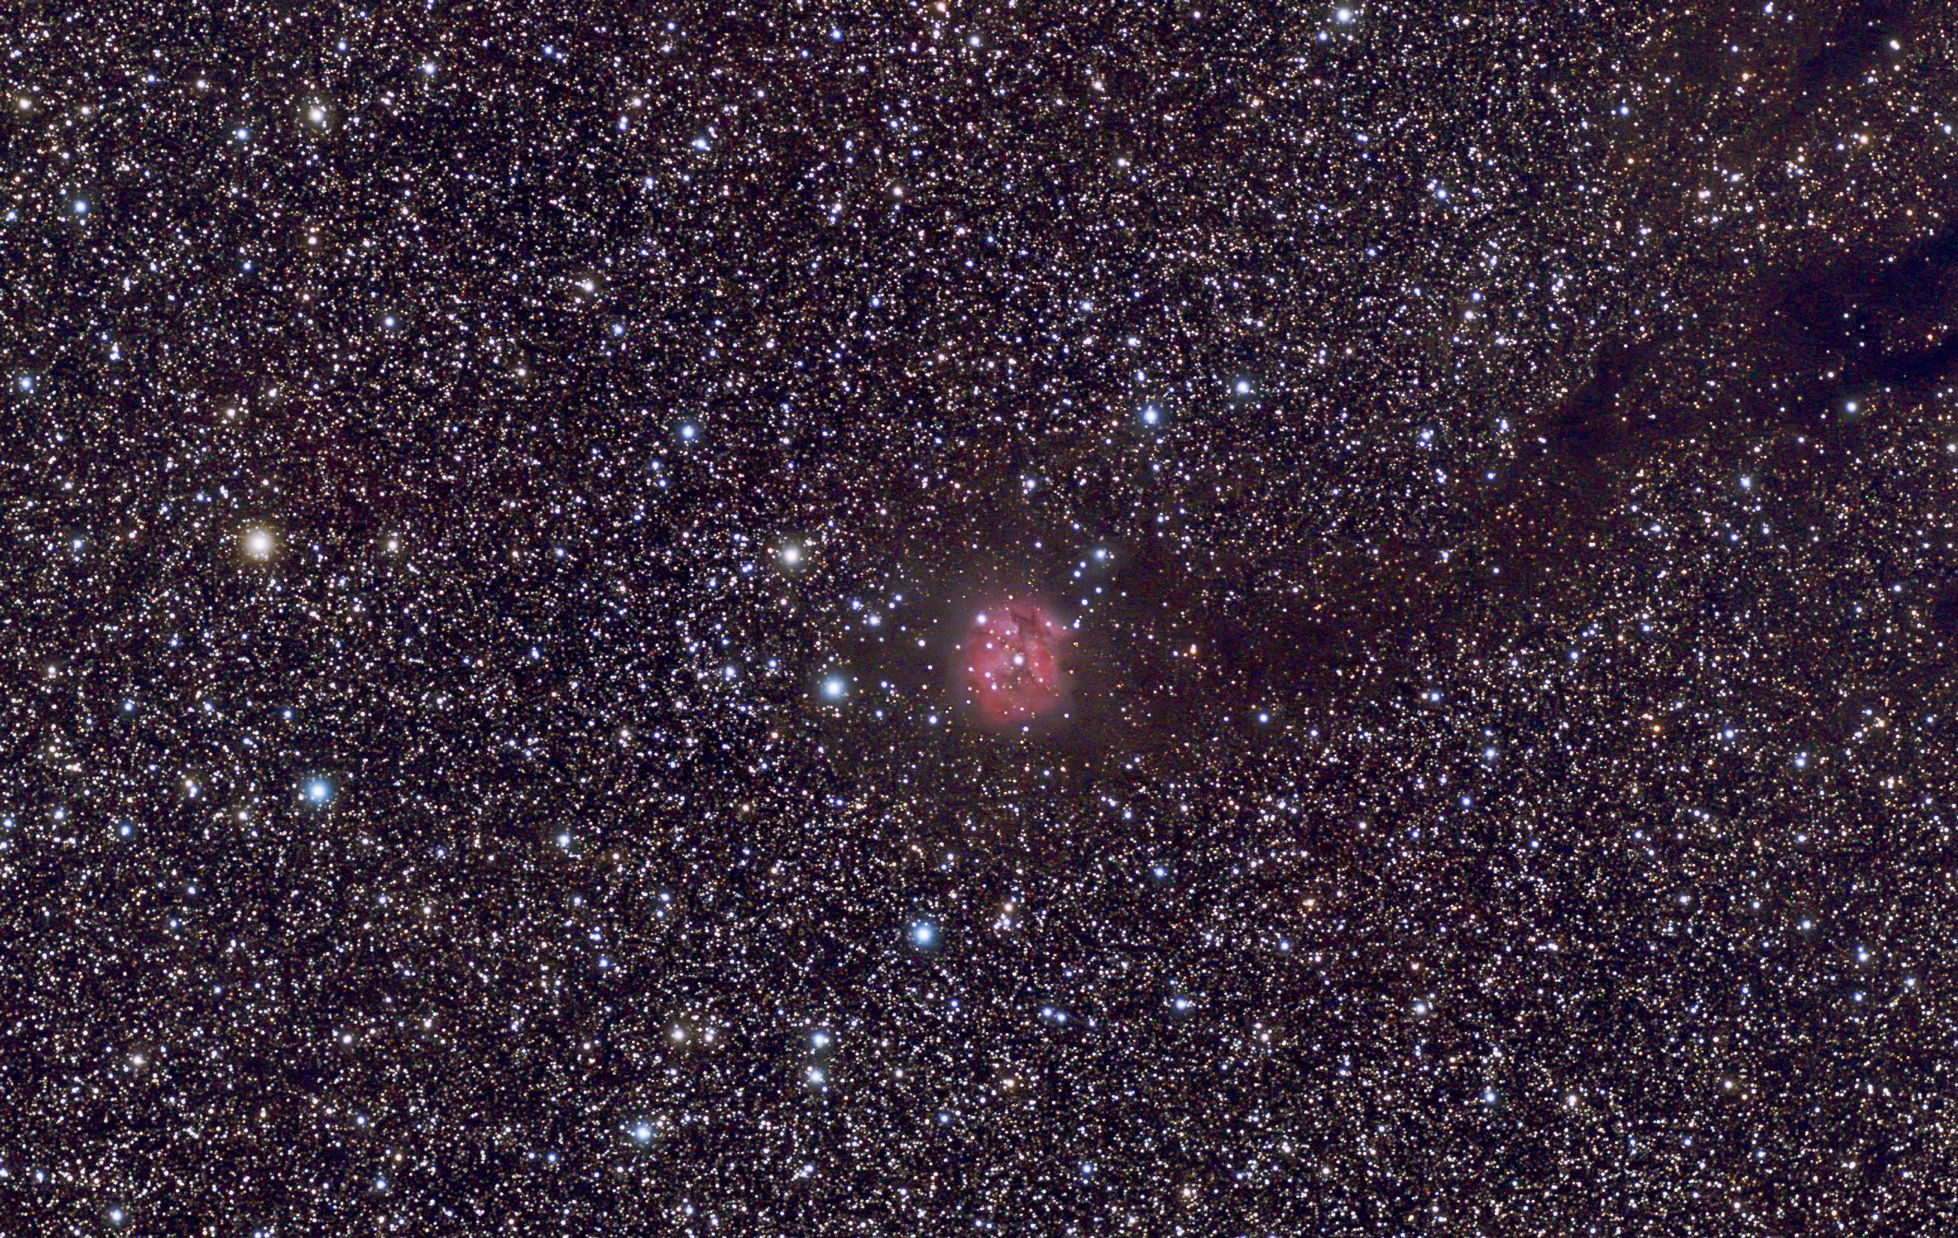 IC 5146 - Cocoon Nebula